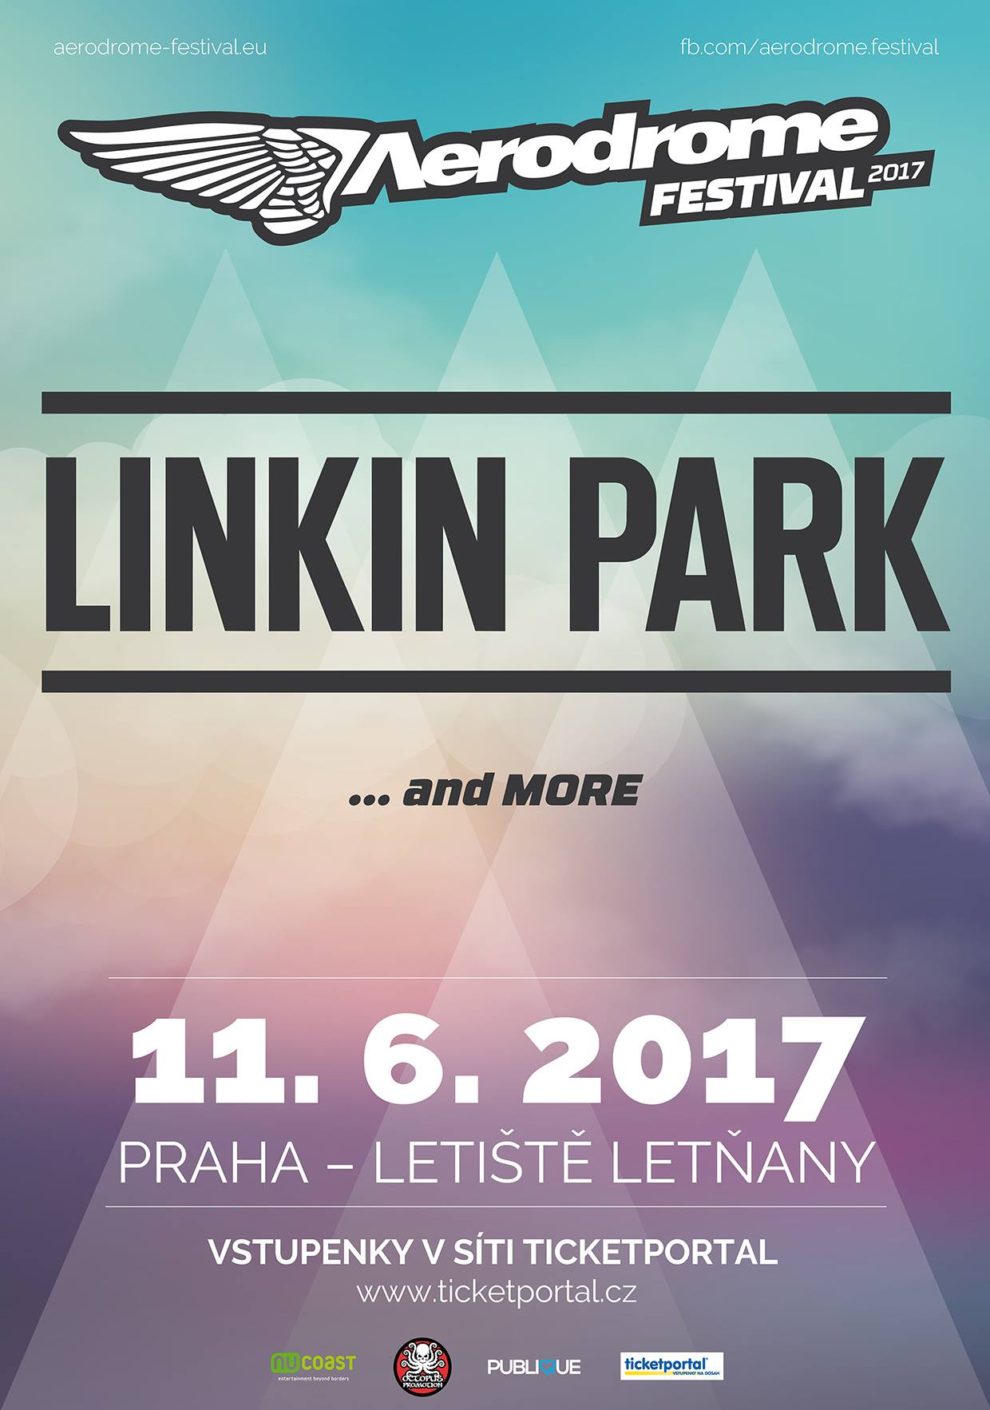 Aerodrome festival - Linkin Park